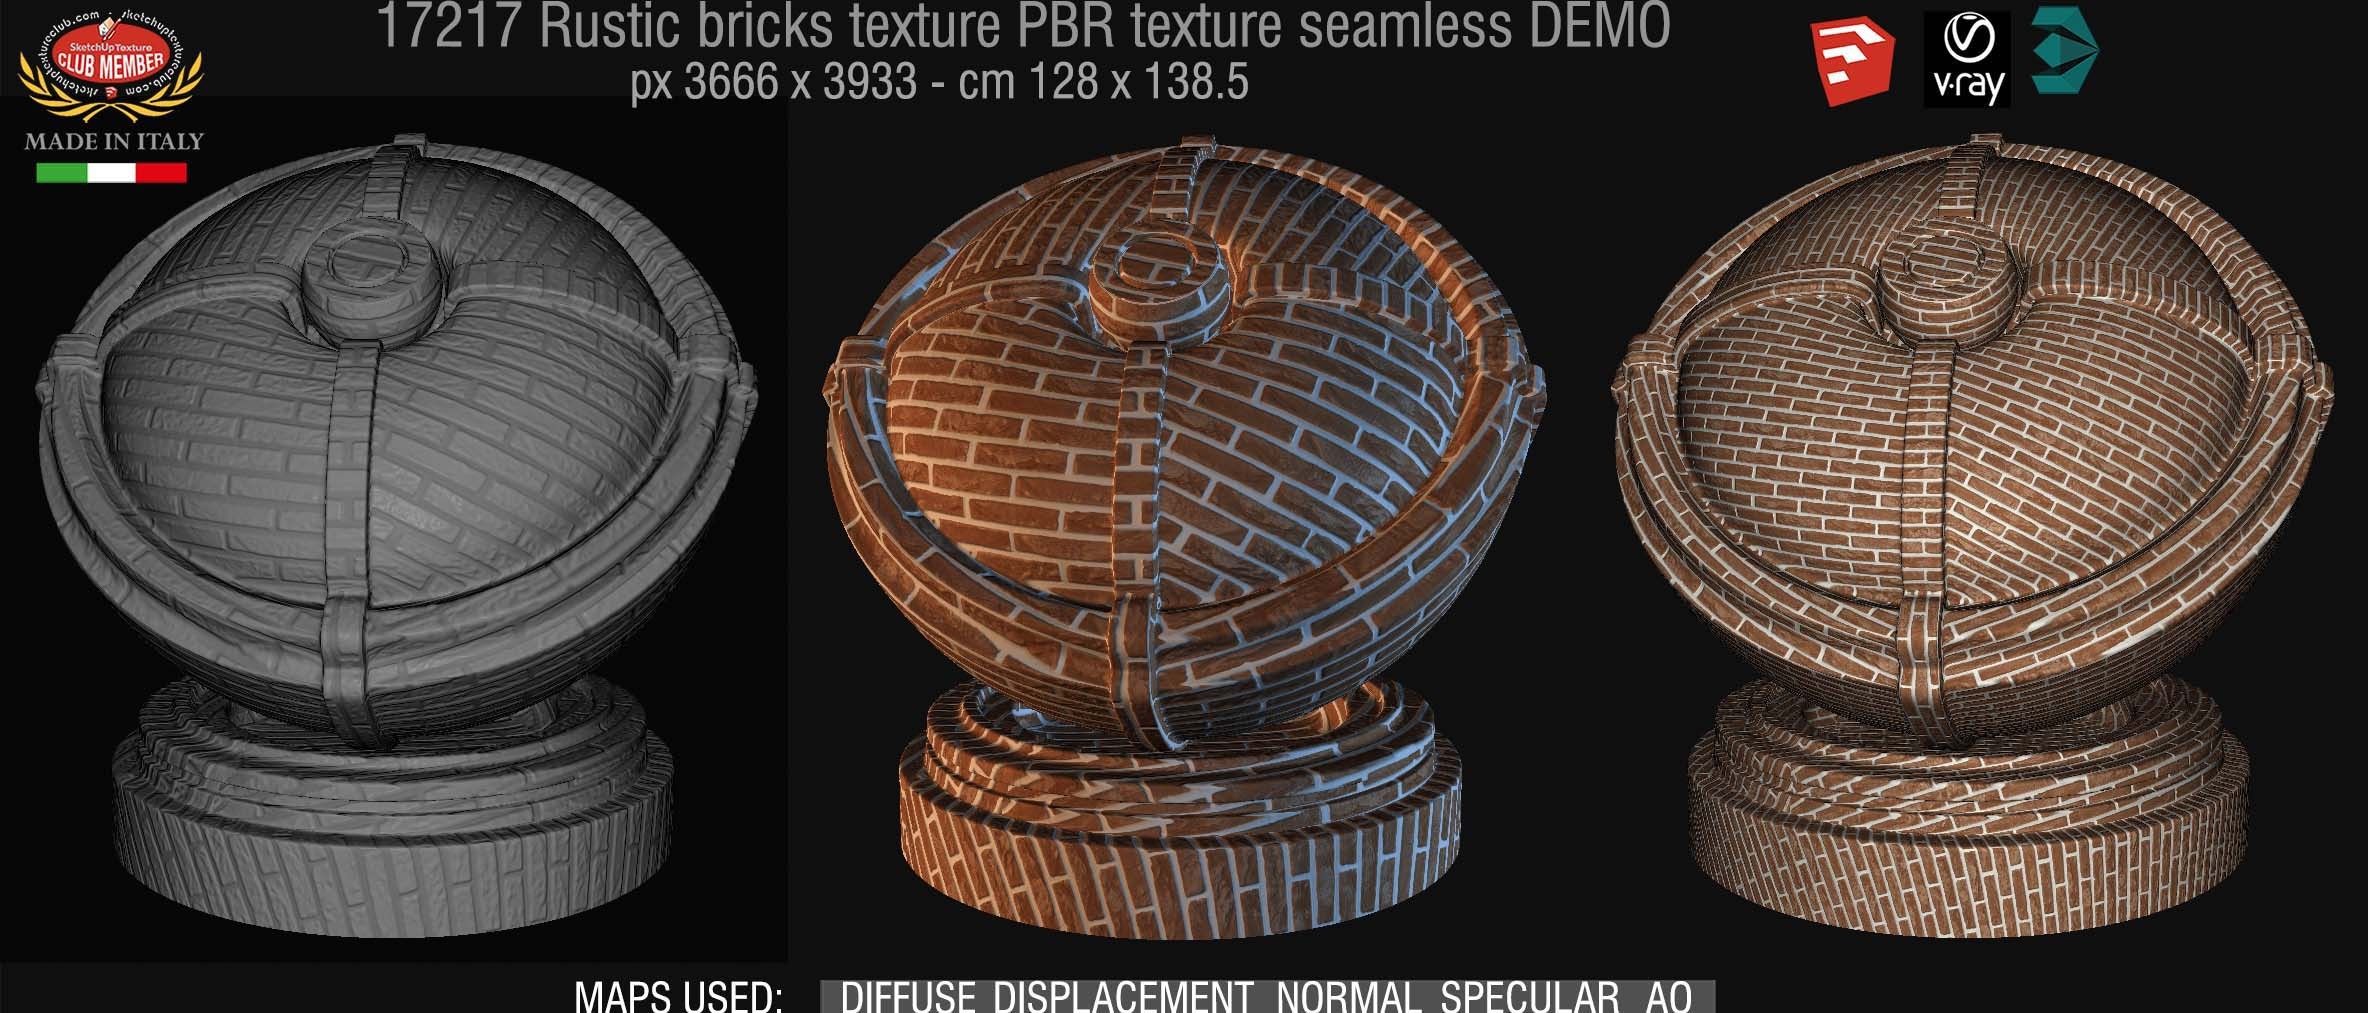 17217 Rustic bricks PBR texture seamless DEMO